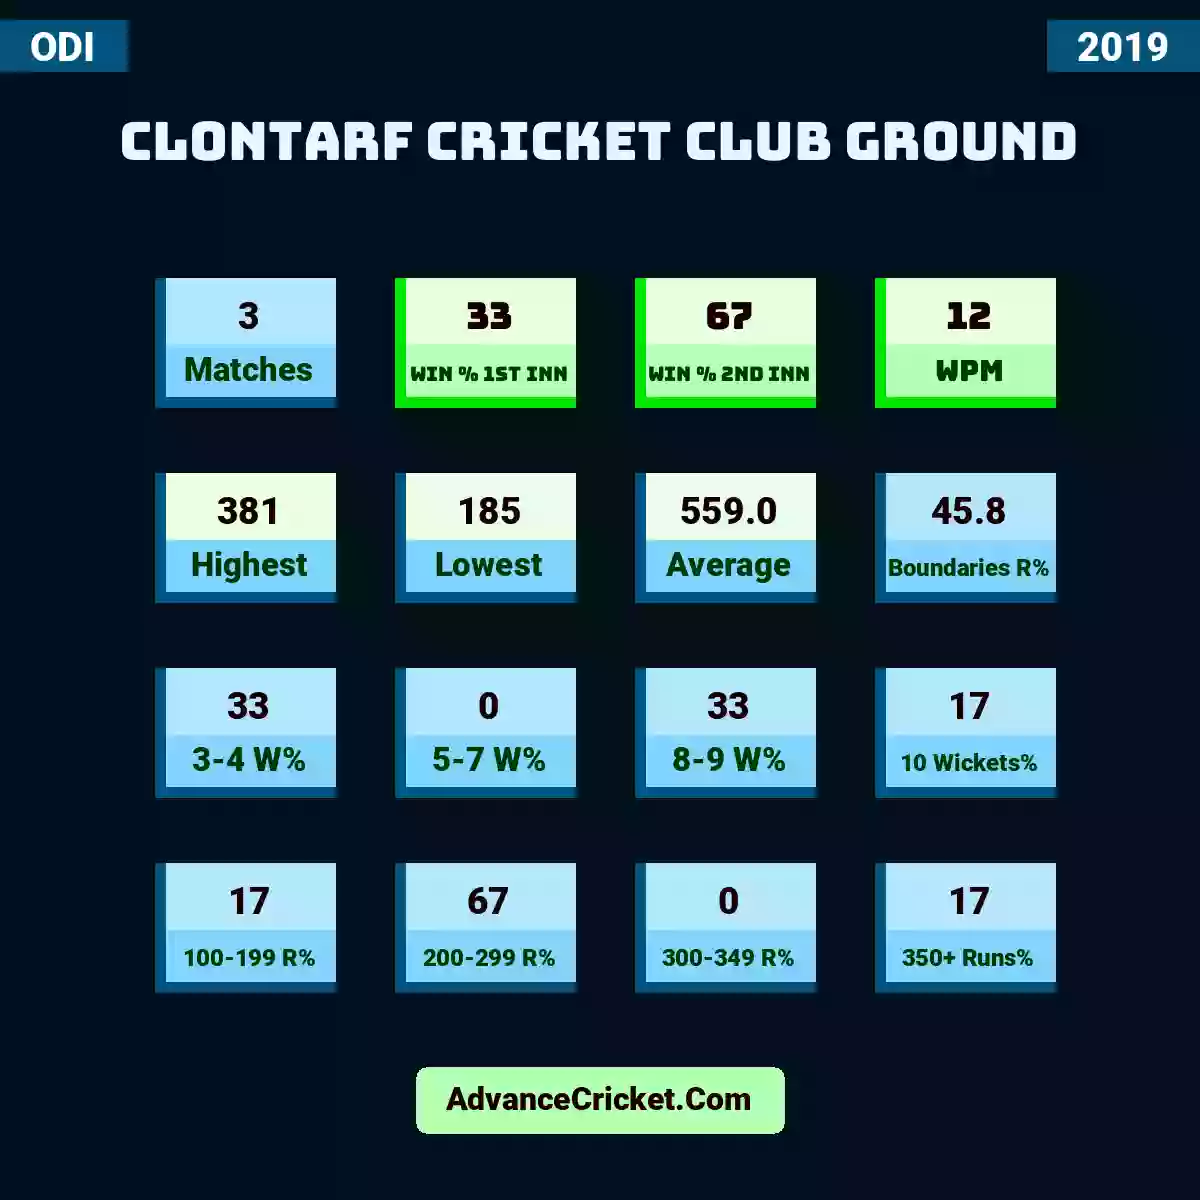 Image showing Clontarf Cricket Club Ground with Matches: 3, Win % 1st Inn: 33, Win % 2nd Inn: 67, WPM: 12, Highest: 381, Lowest: 185, Average: 559.0, Boundaries R%: 45.8, 3-4 W%: 33, 5-7 W%: 0, 8-9 W%: 33, 10 Wickets%: 17, 100-199 R%: 17, 200-299 R%: 67, 300-349 R%: 0, 350+ Runs%: 17.